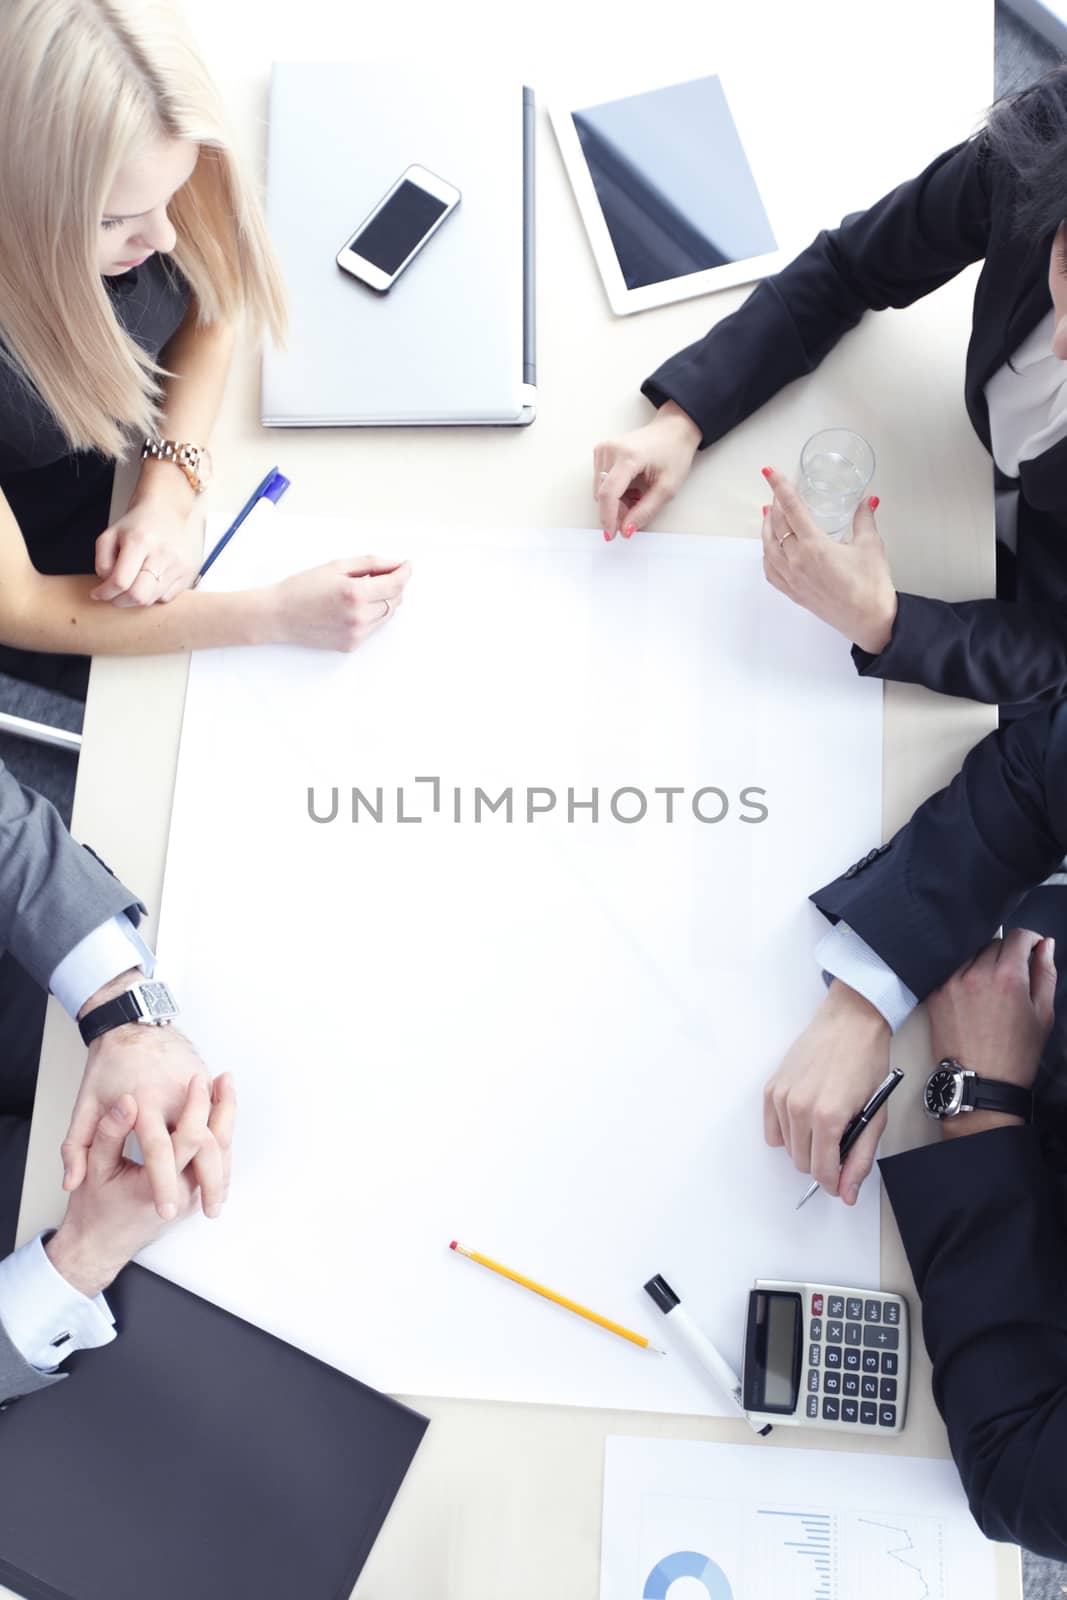 Business people on meeting by ALotOfPeople